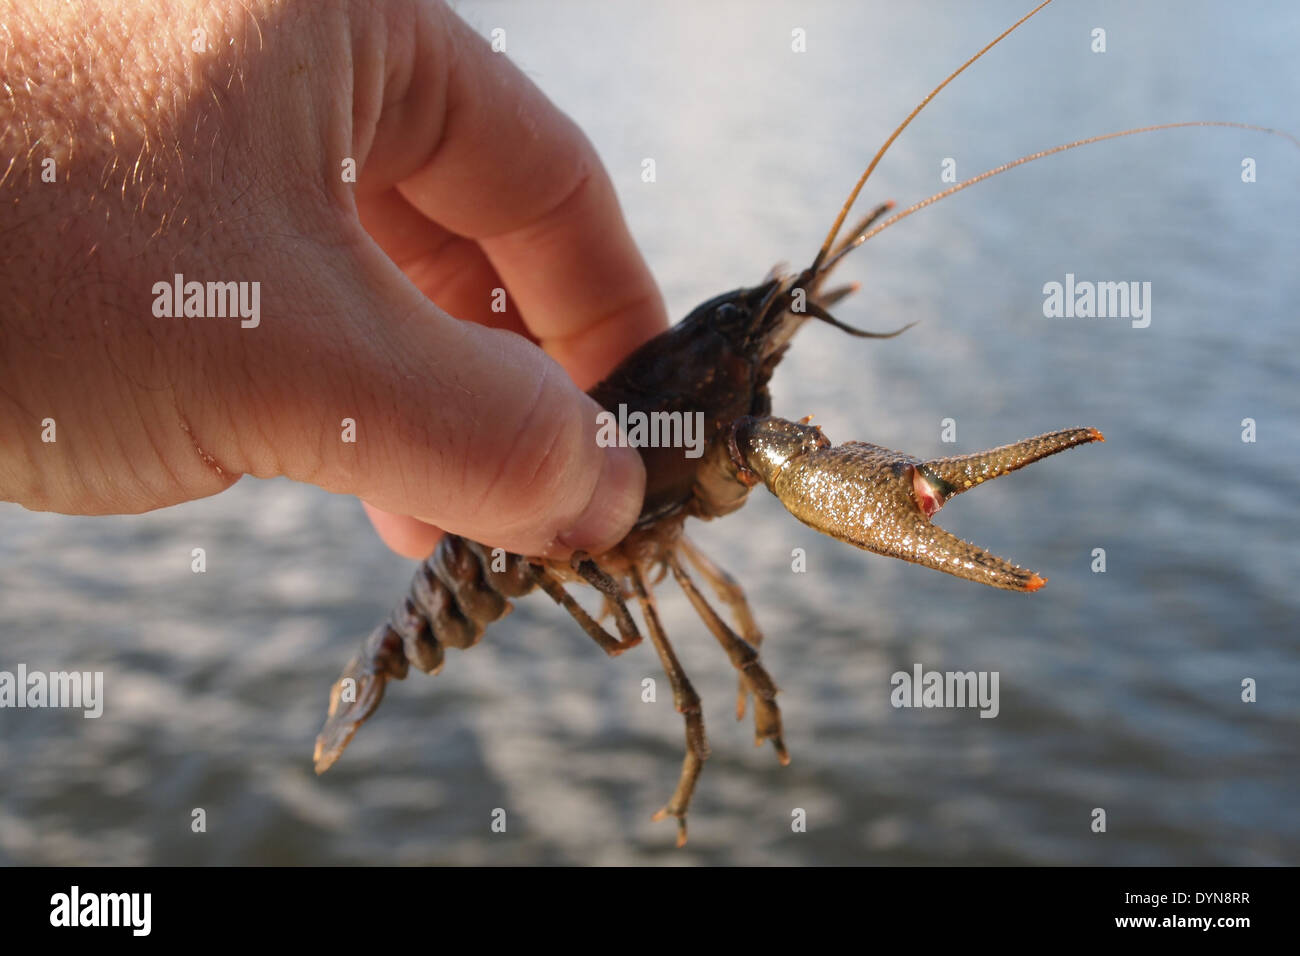 big alive crayfish in hand Stock Photo